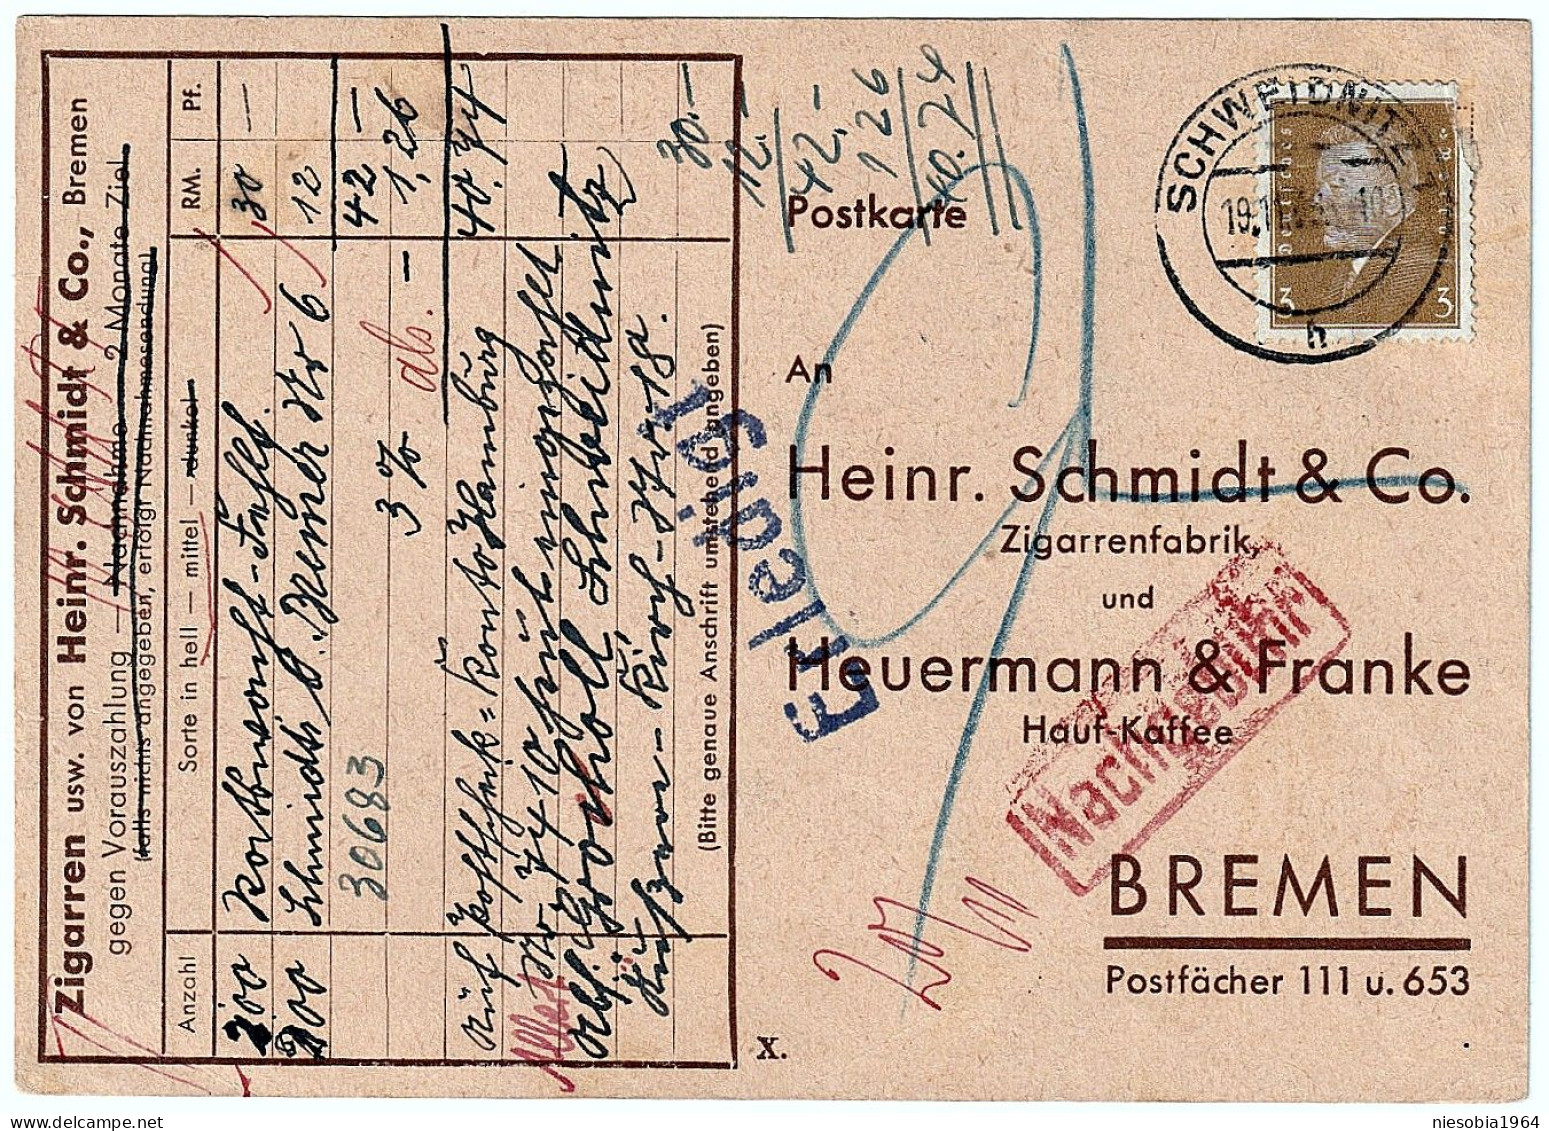 Company Postcard Heinr. Schmidt & Co.Cigar Factory And Heurenmann & Franke Hauf-Kaffe BREMEN Seal SCHWEIDNITZ 19/11/1938 - Postcards